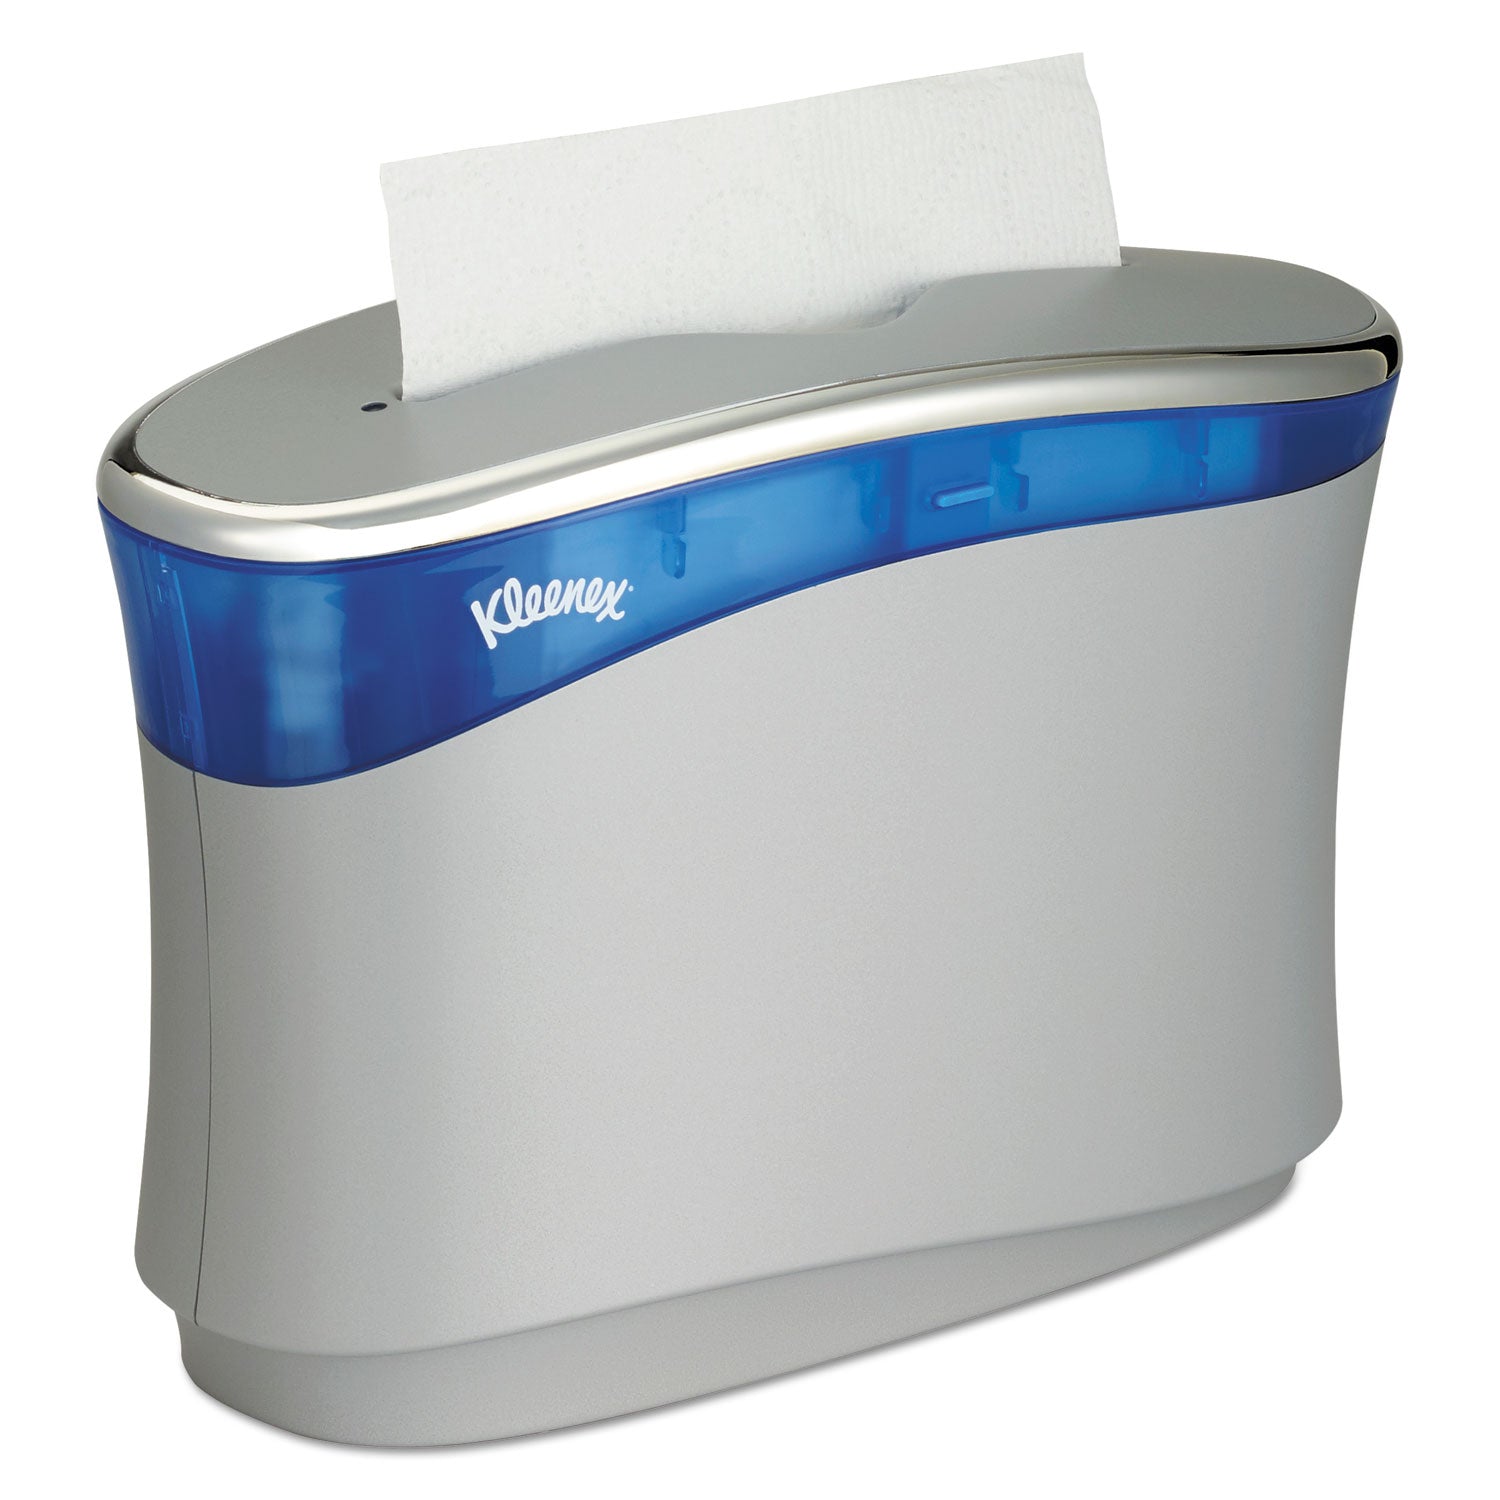 reveal-countertop-folded-towel-dispenser-133-x-52-x-9-soft-gray-translucent-blue_kcc51904 - 1